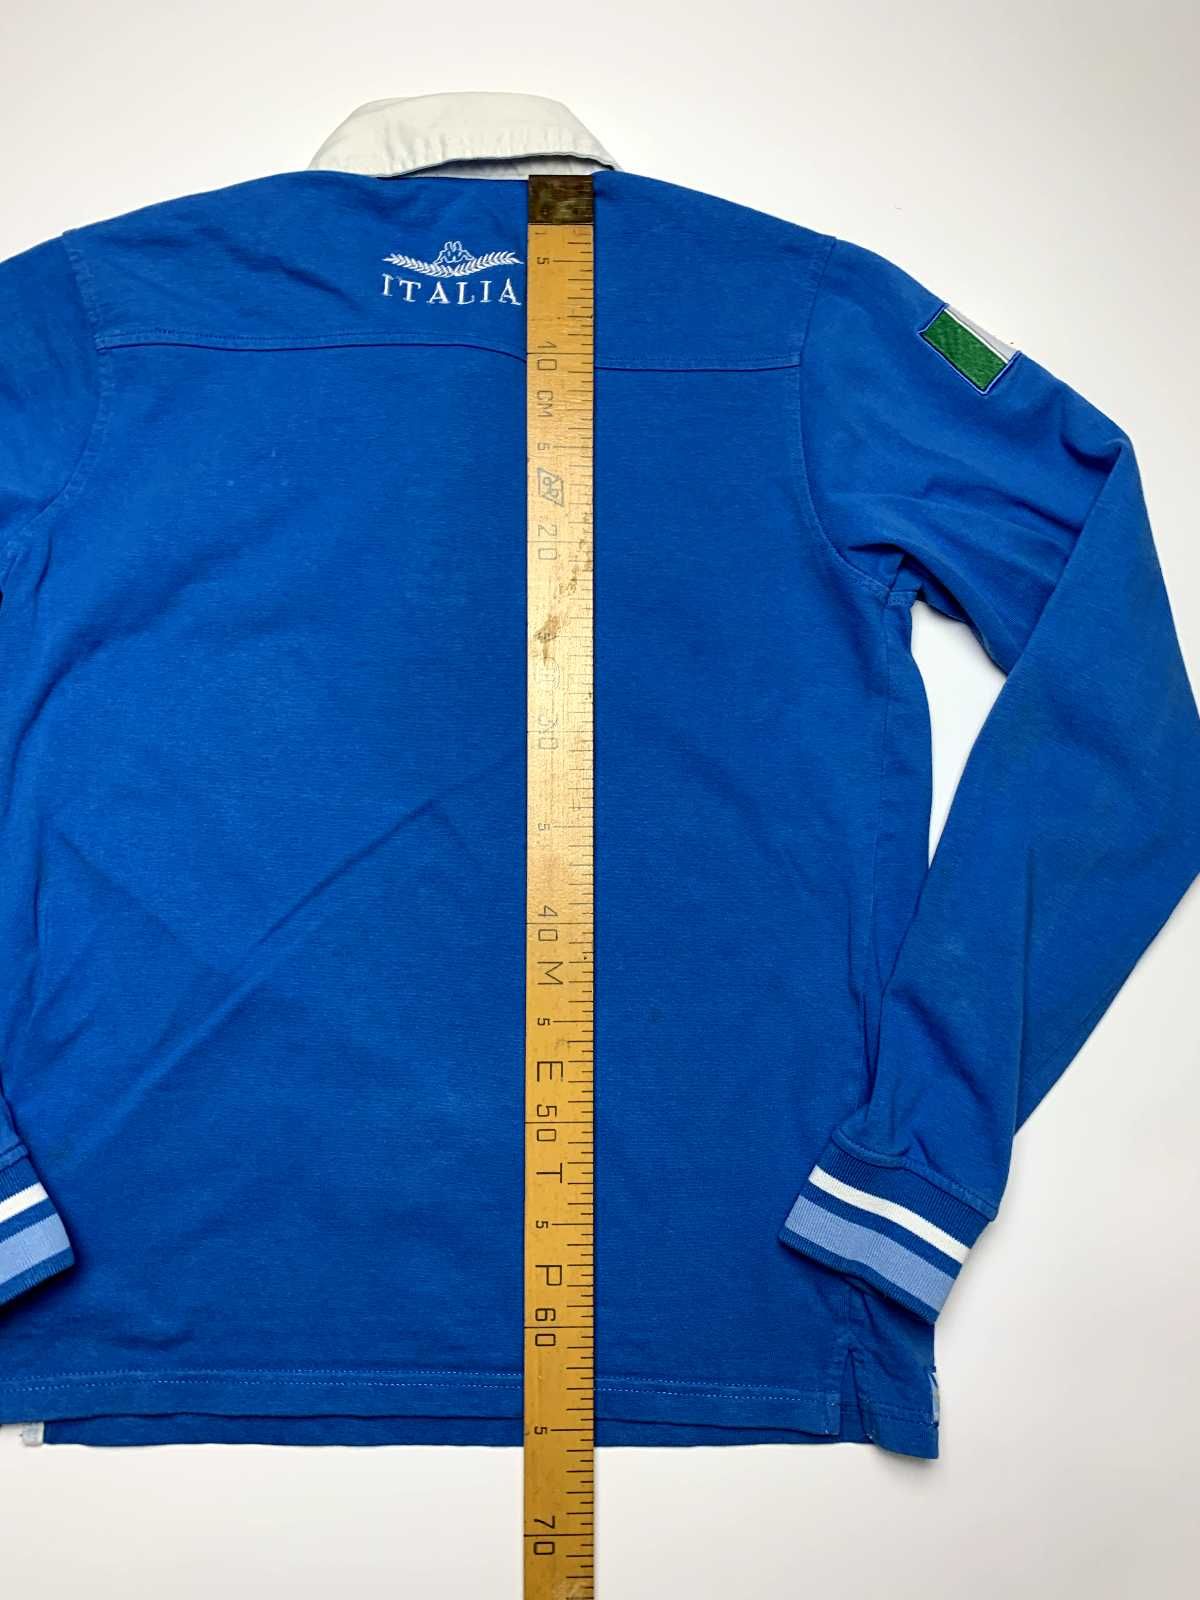 Kappa Sport Италия 9 Синяя футболка поло с длинным рукавом Размер M